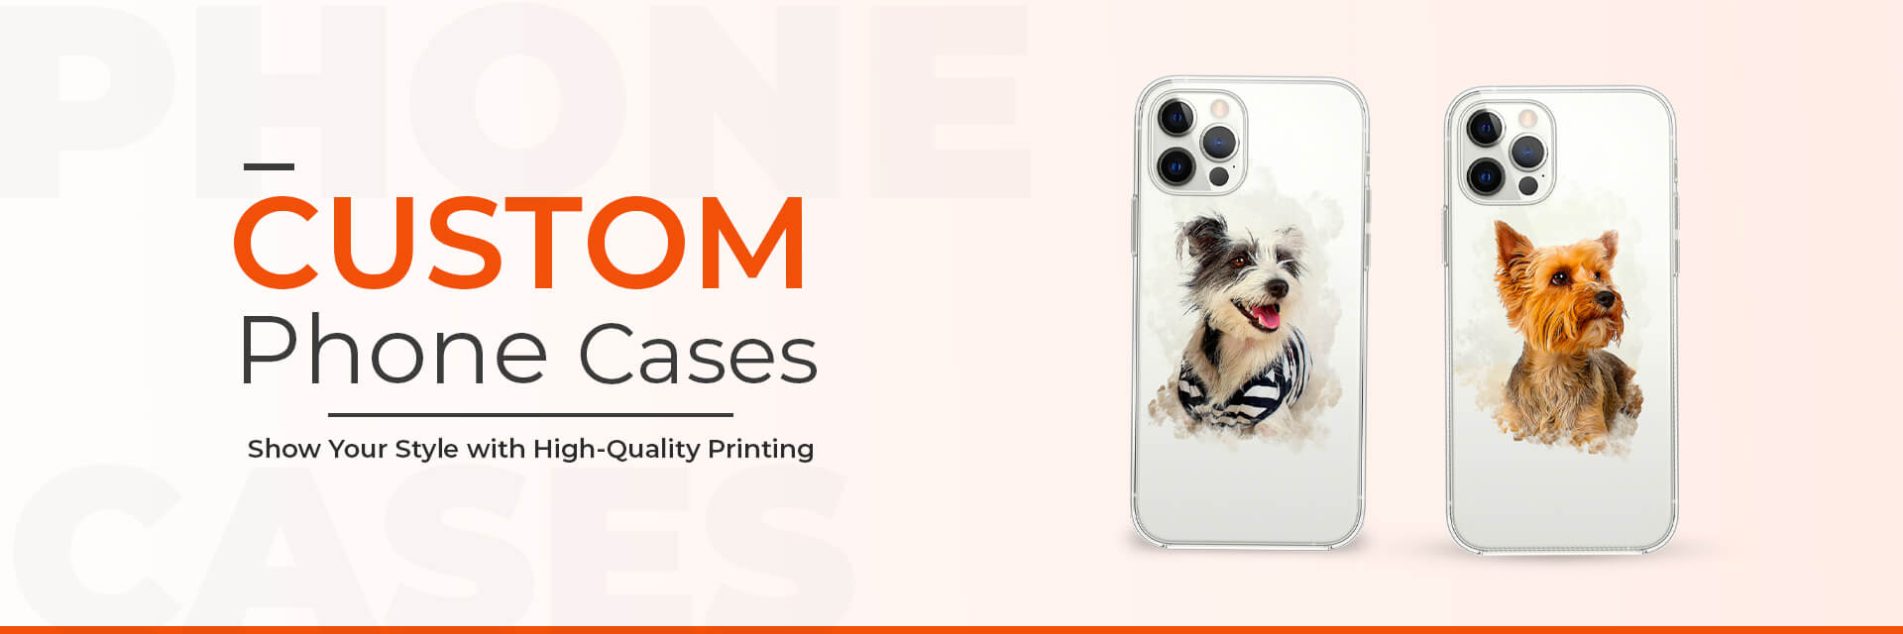 custom_phone_cases